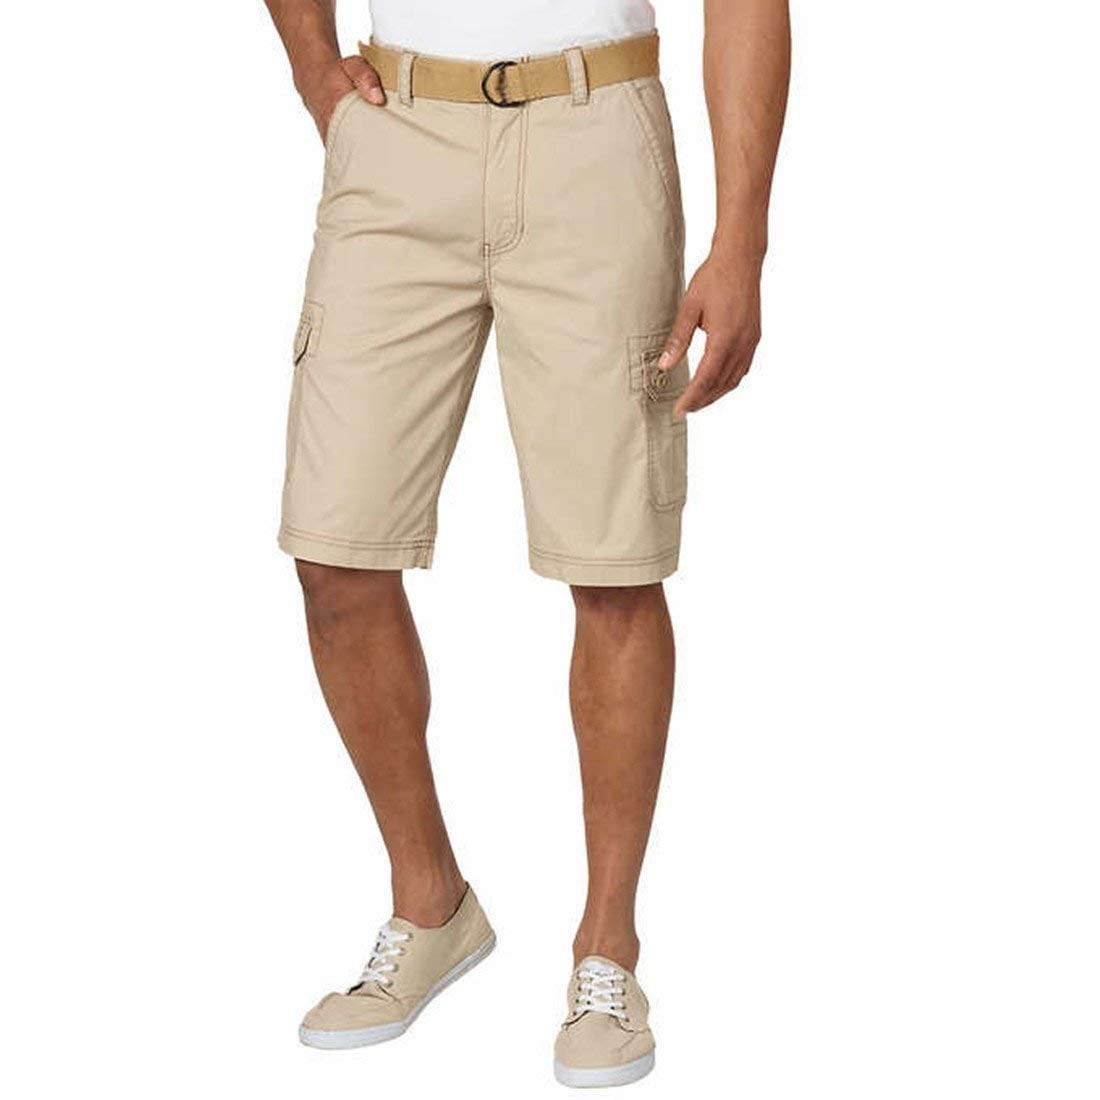 wearfirst mens cargo short with belt, variety (32, tan) - Walmart.com